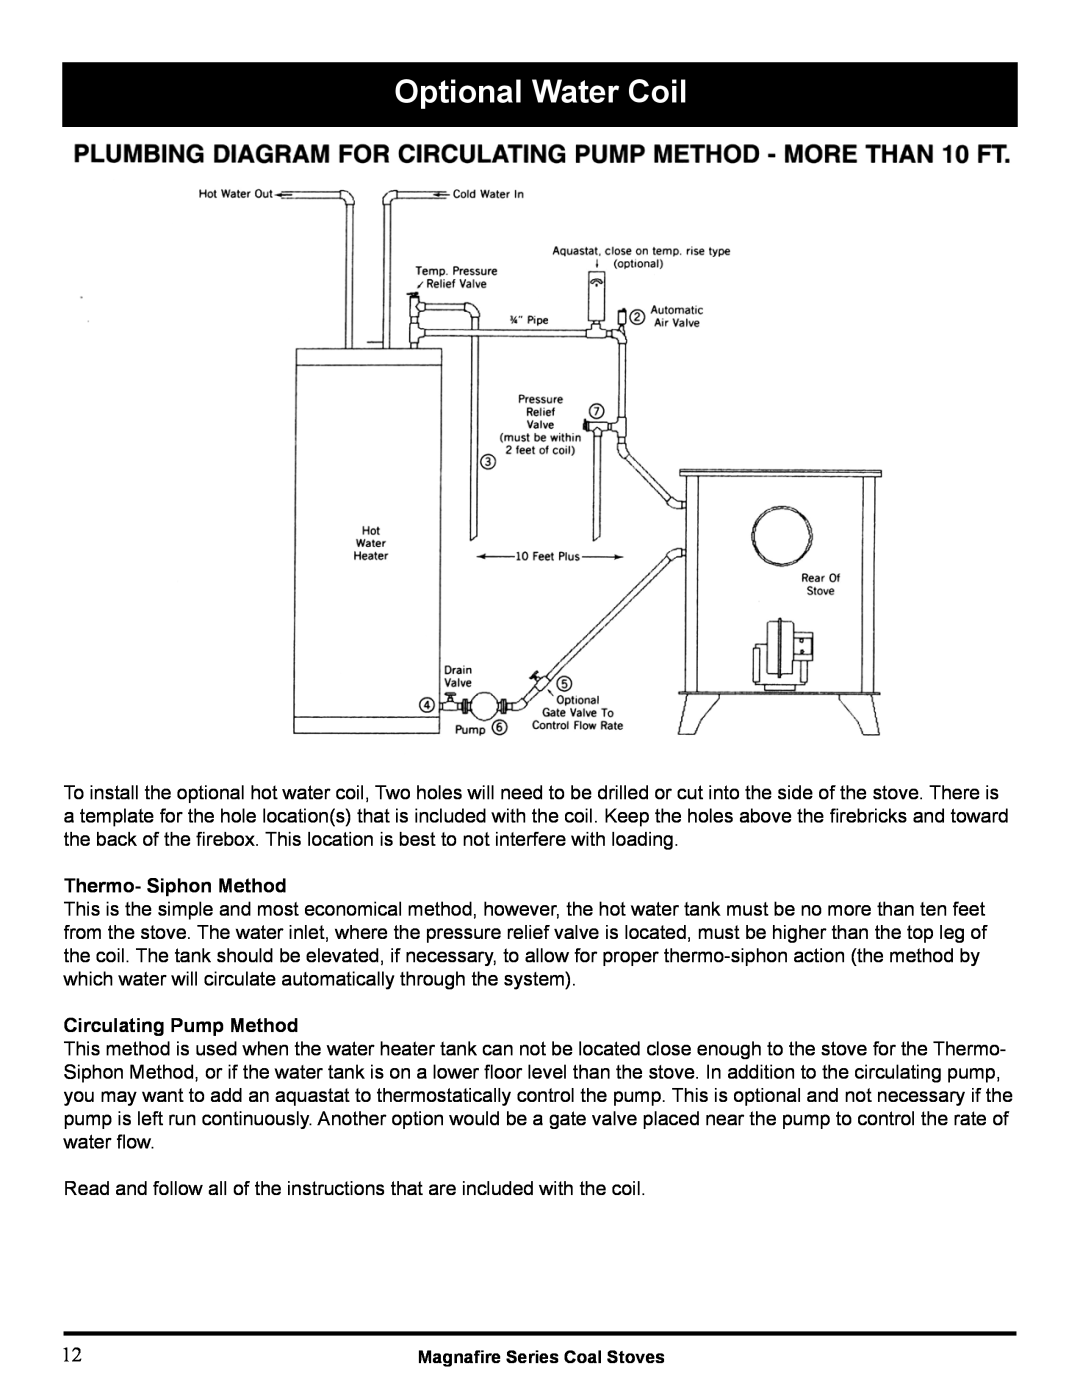 Harman Stove Company MARK III manual Optional Water Coil, Thermo- Siphon Method, Circulating Pump Method 